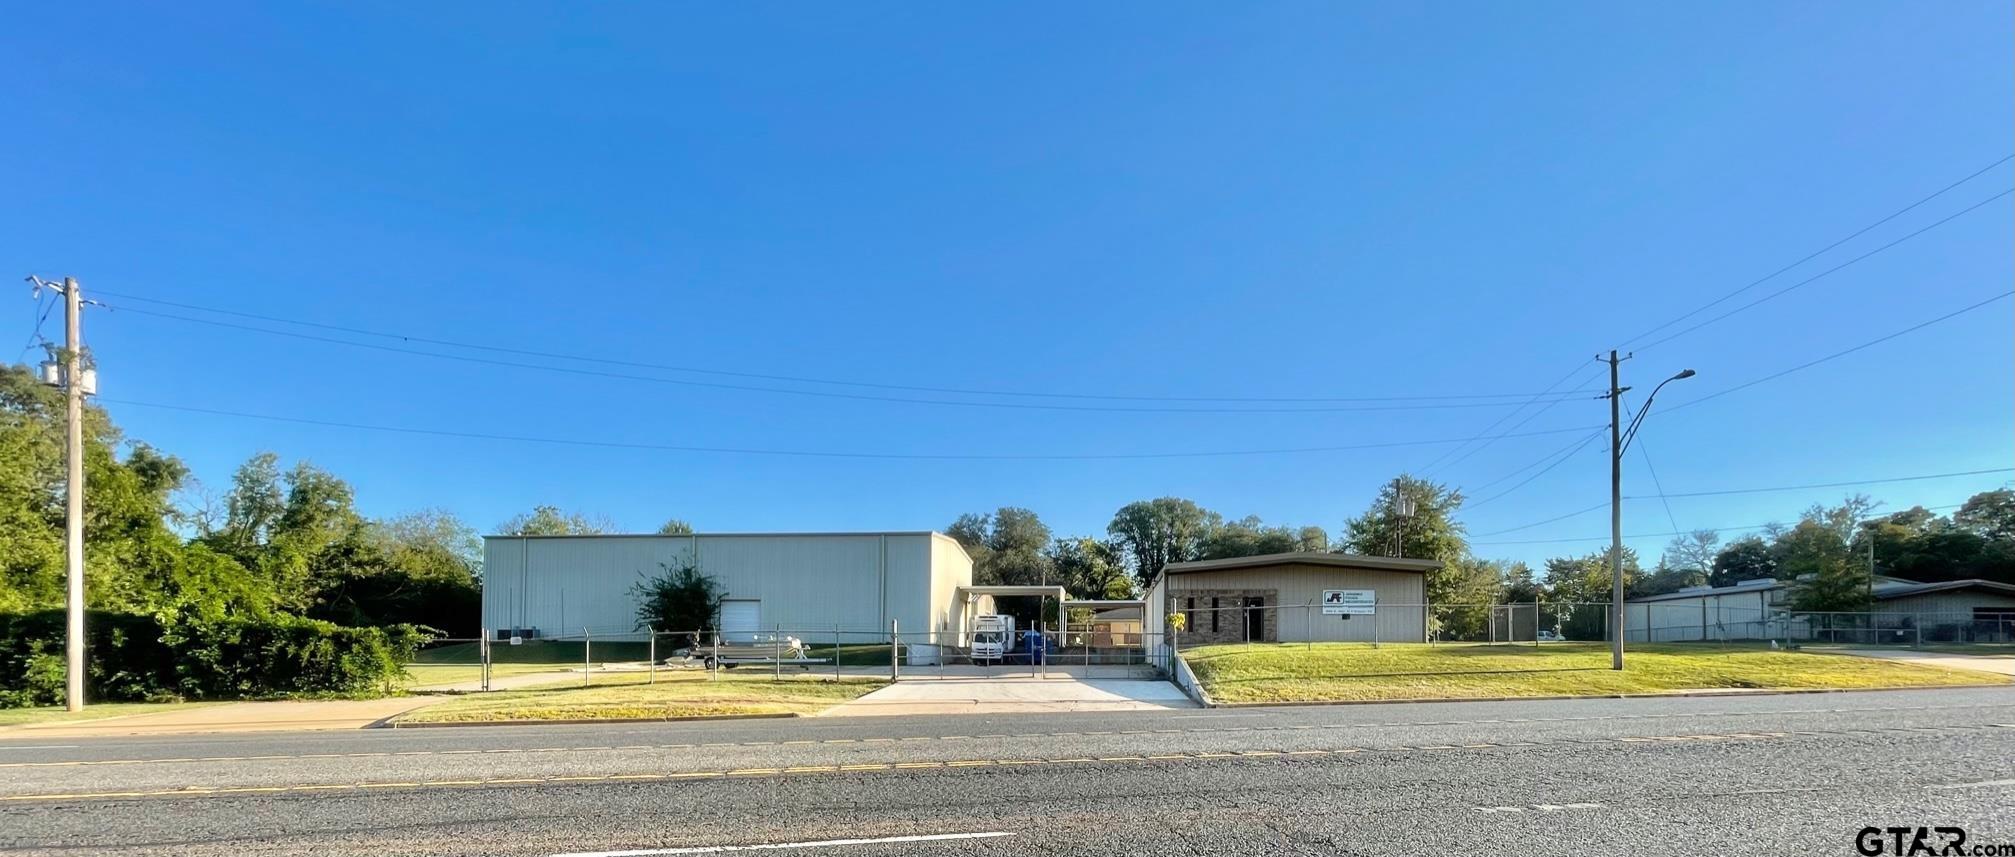 1810 SH 31, Kilgore, Texas 75662, ,Building,For Sale,SH 31,10157495